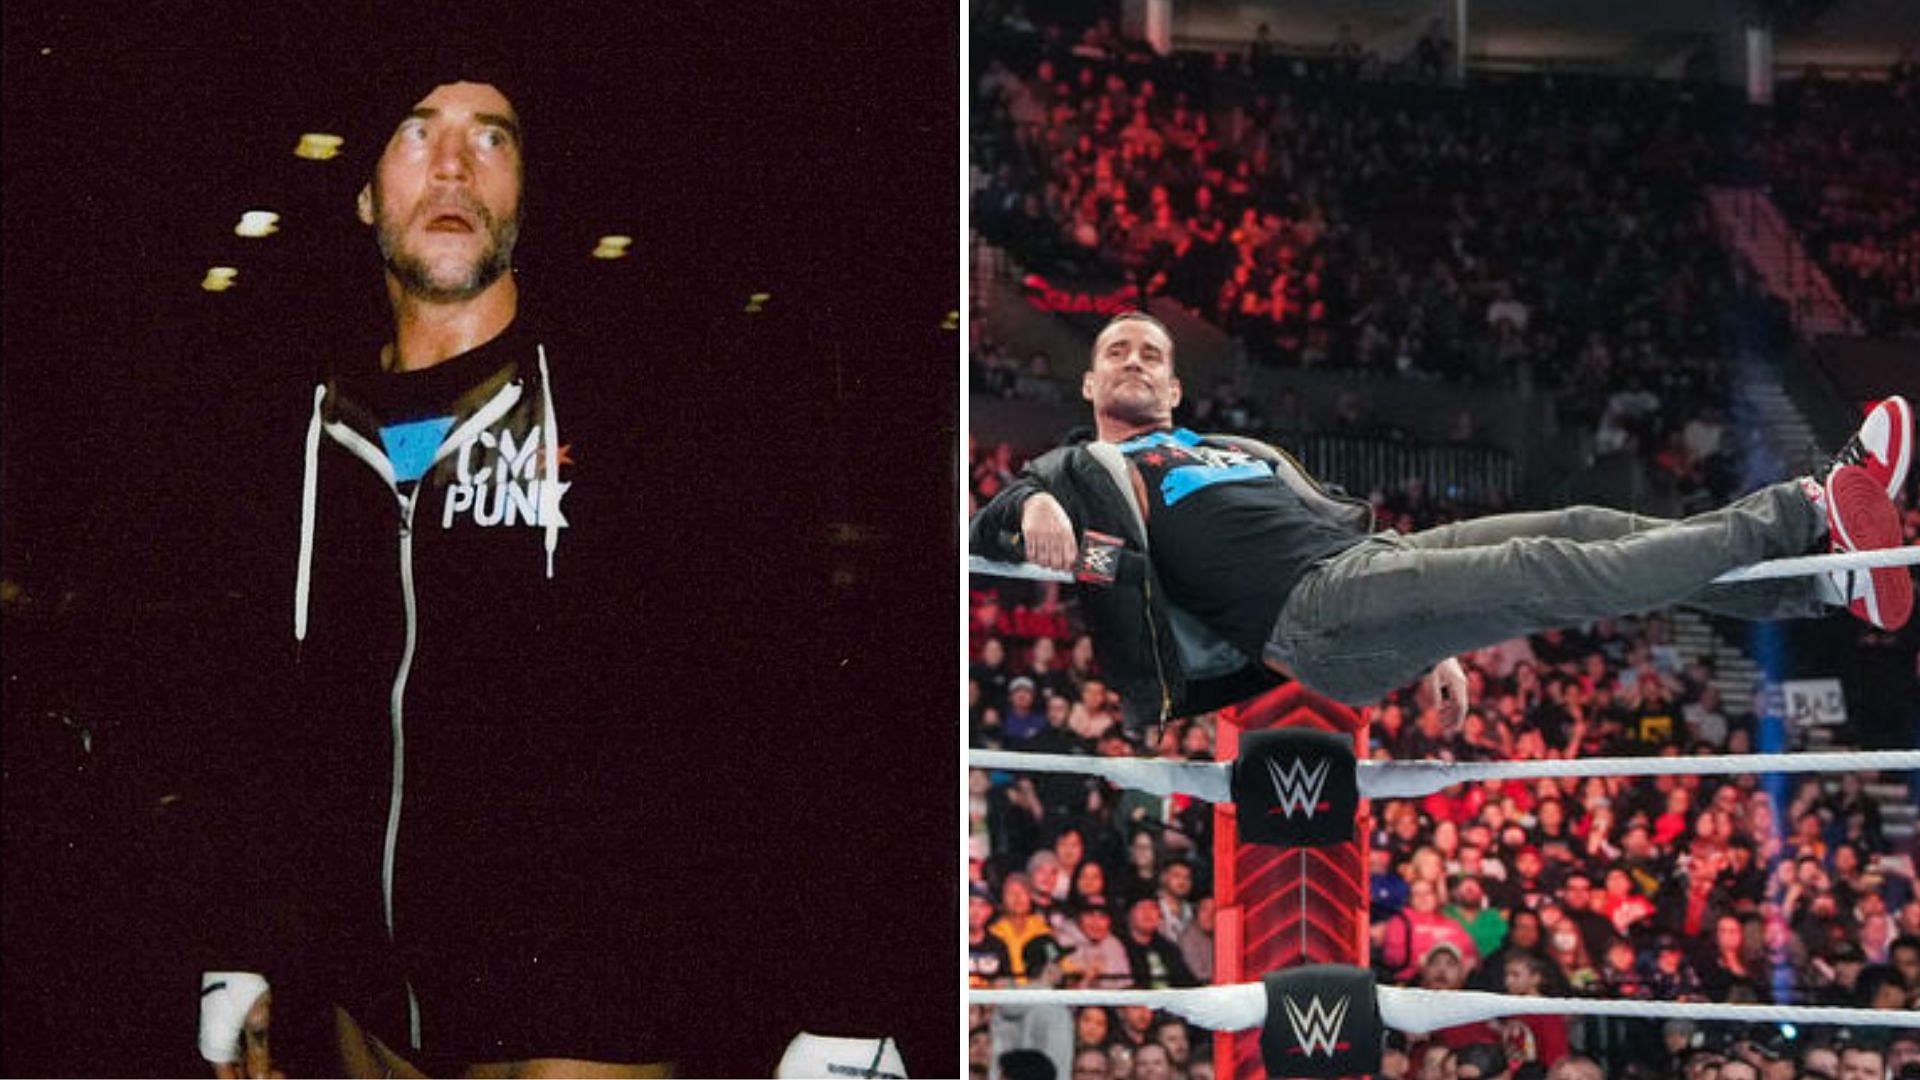 CM Punk is a former WWE Champion